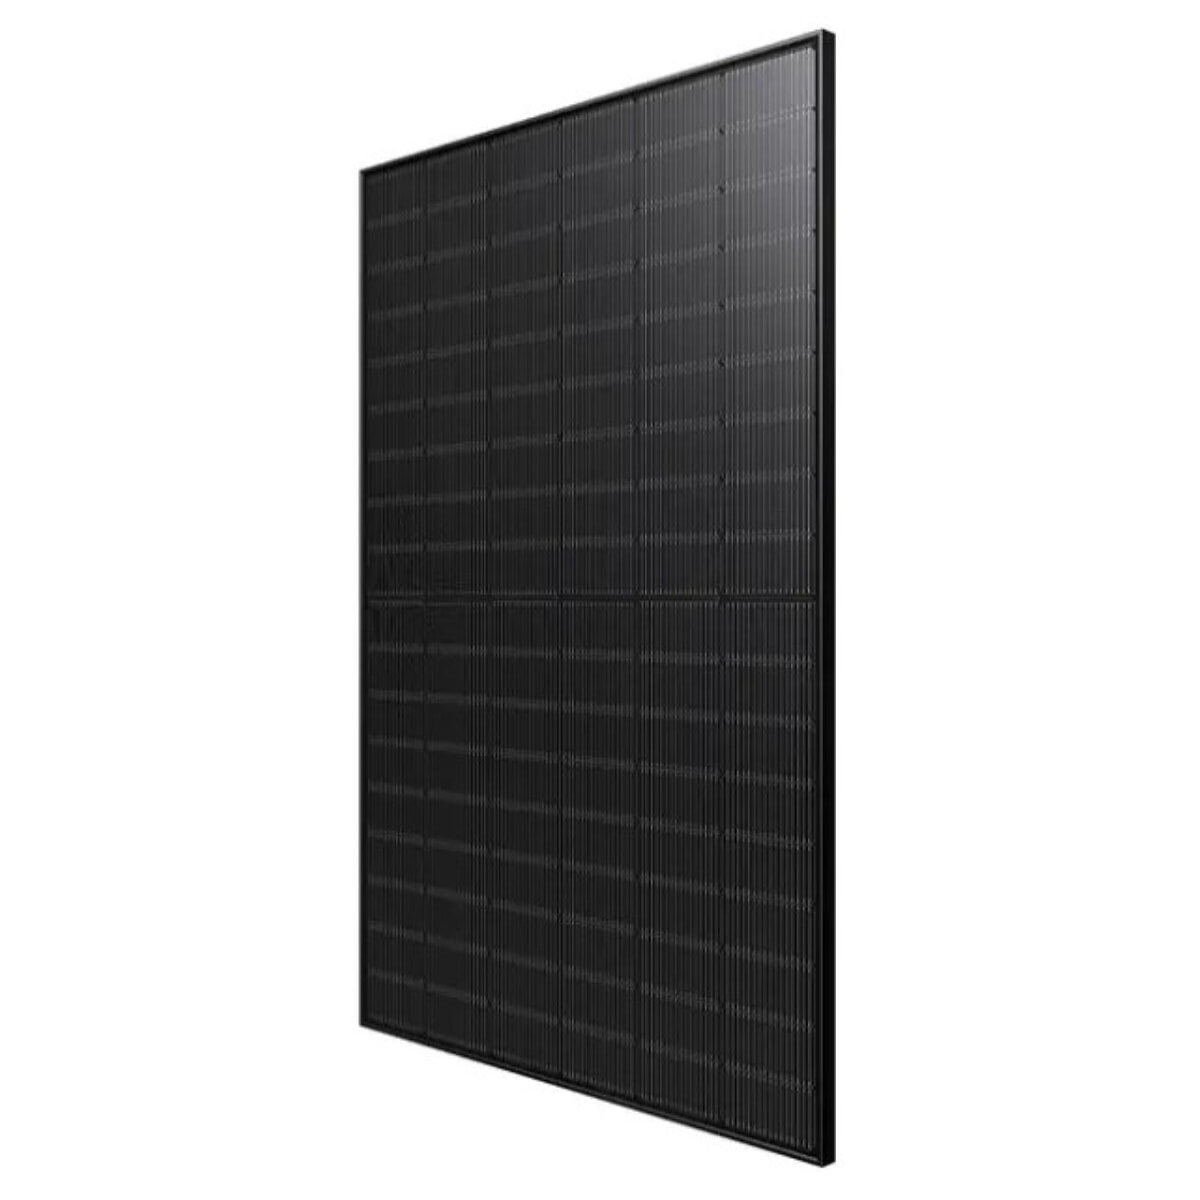 WINAICO solar module WST-425NGXB-D3 Full Black glass-glass bifacial